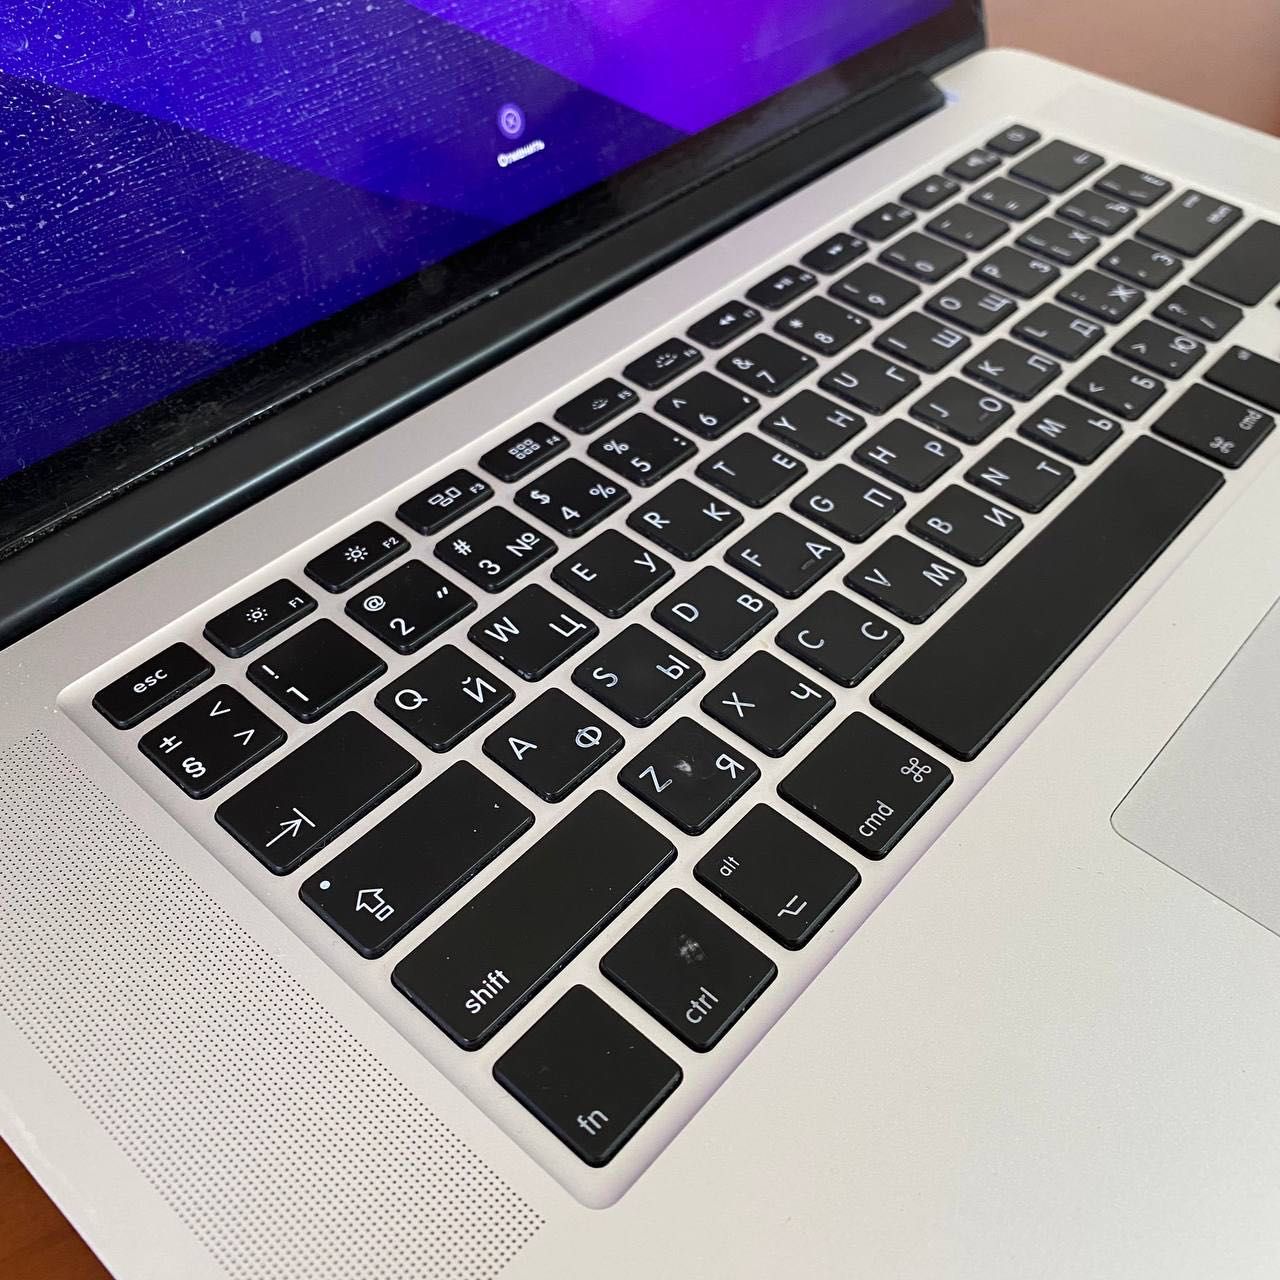 MacBook Pro (Retina, 15-inch, Mid 2015 год) 500 Gb